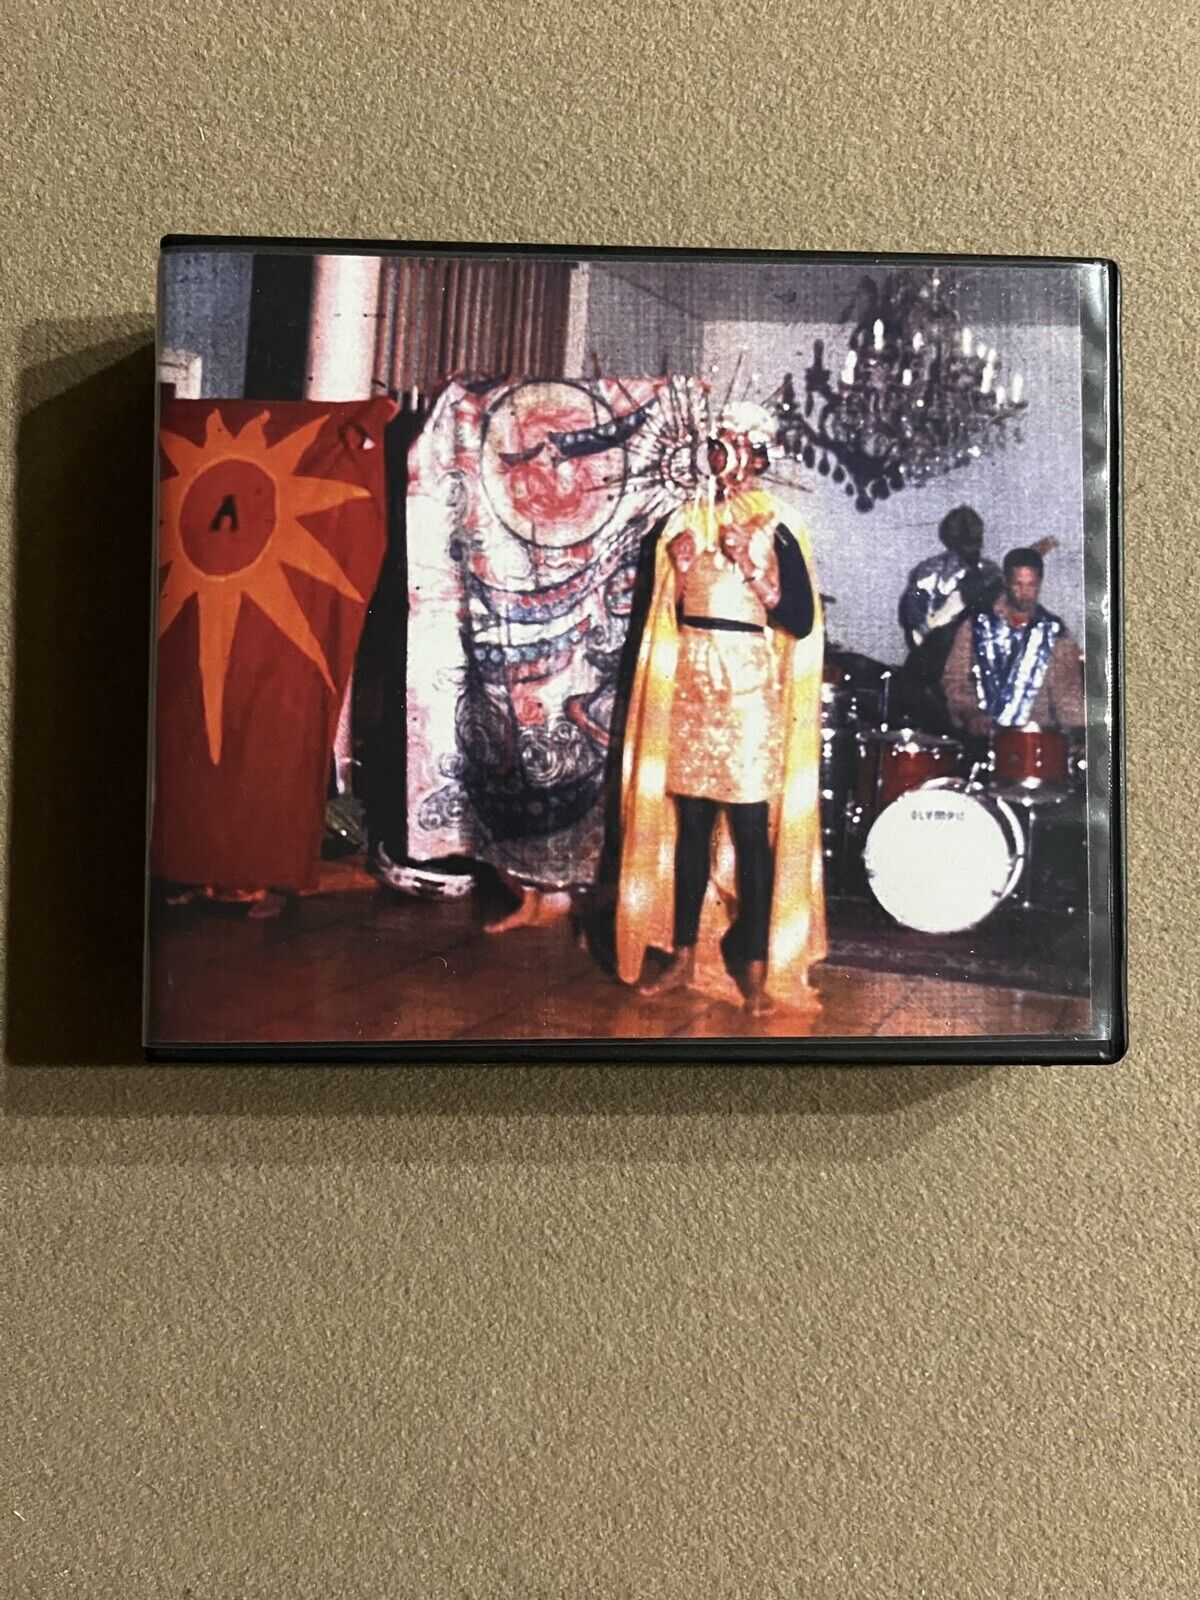 Sun Ra Live At The Horseshoe Tavern Toronto 1978. Transparency 10 CDs.